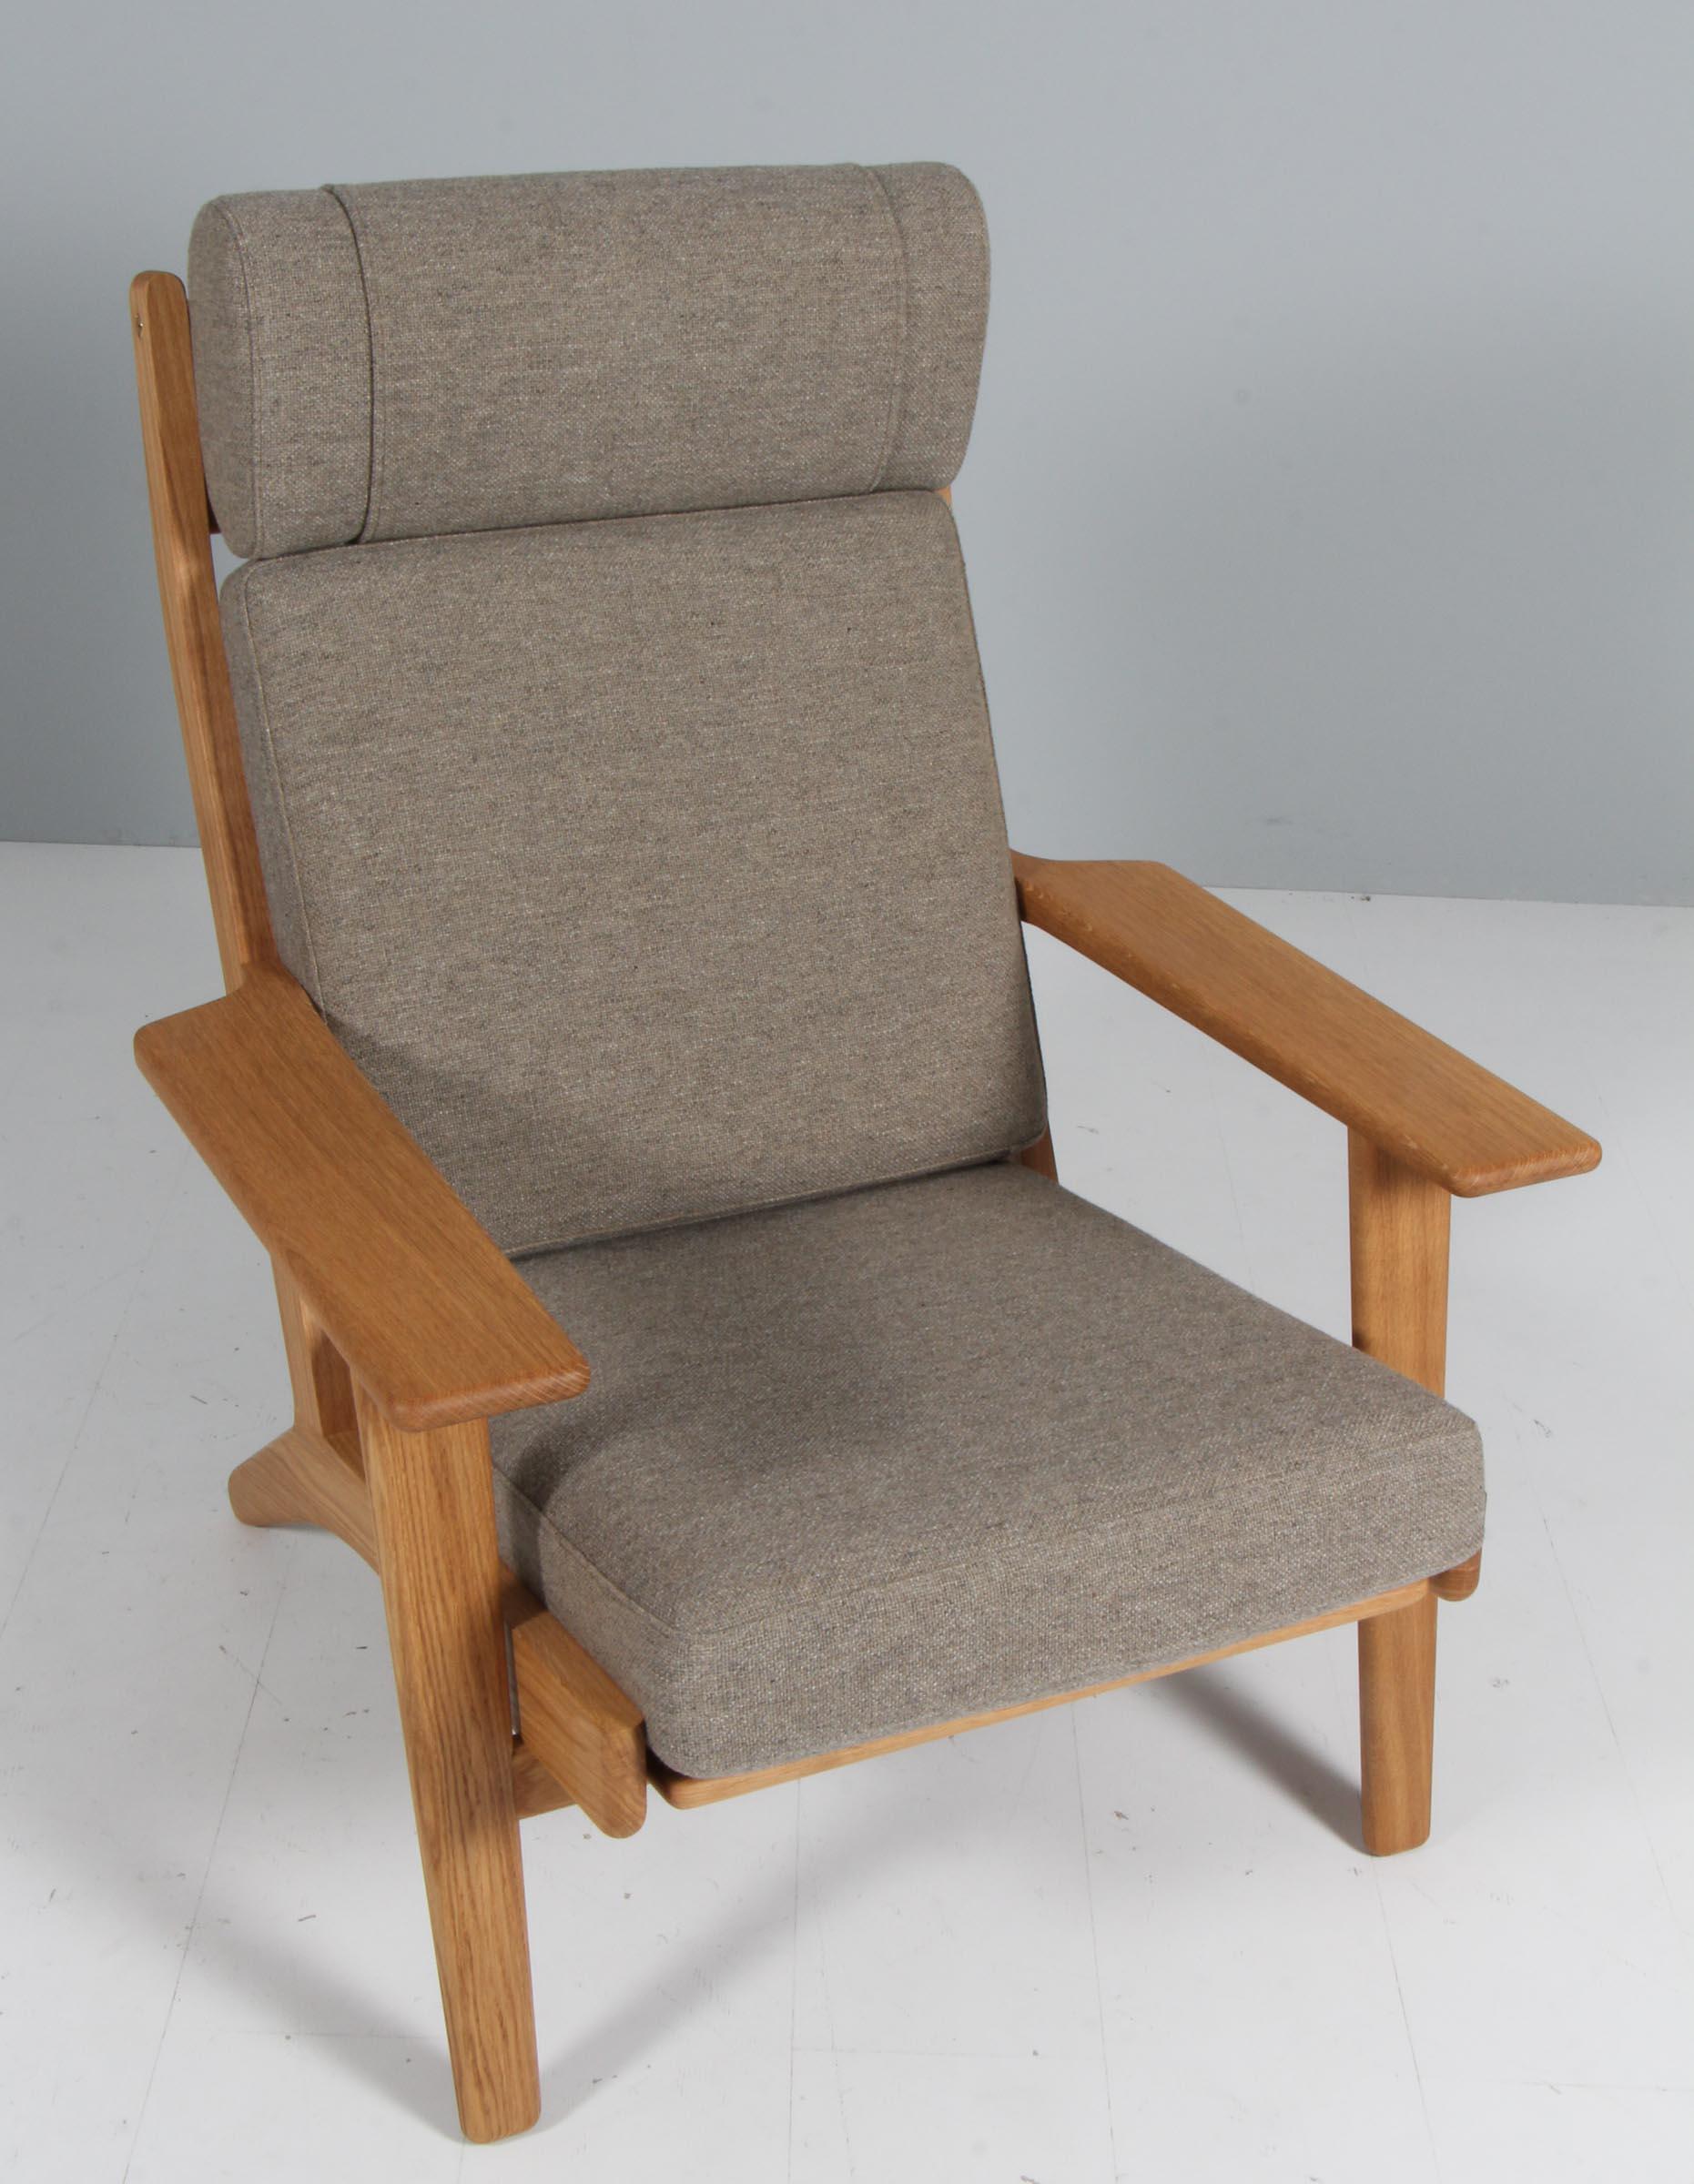 Hans J. Wegner lounge chair made of solid oak.

Original upholstered with Hallingdal 227 from Kvadrat

Model 290A, made by GETAMA.

